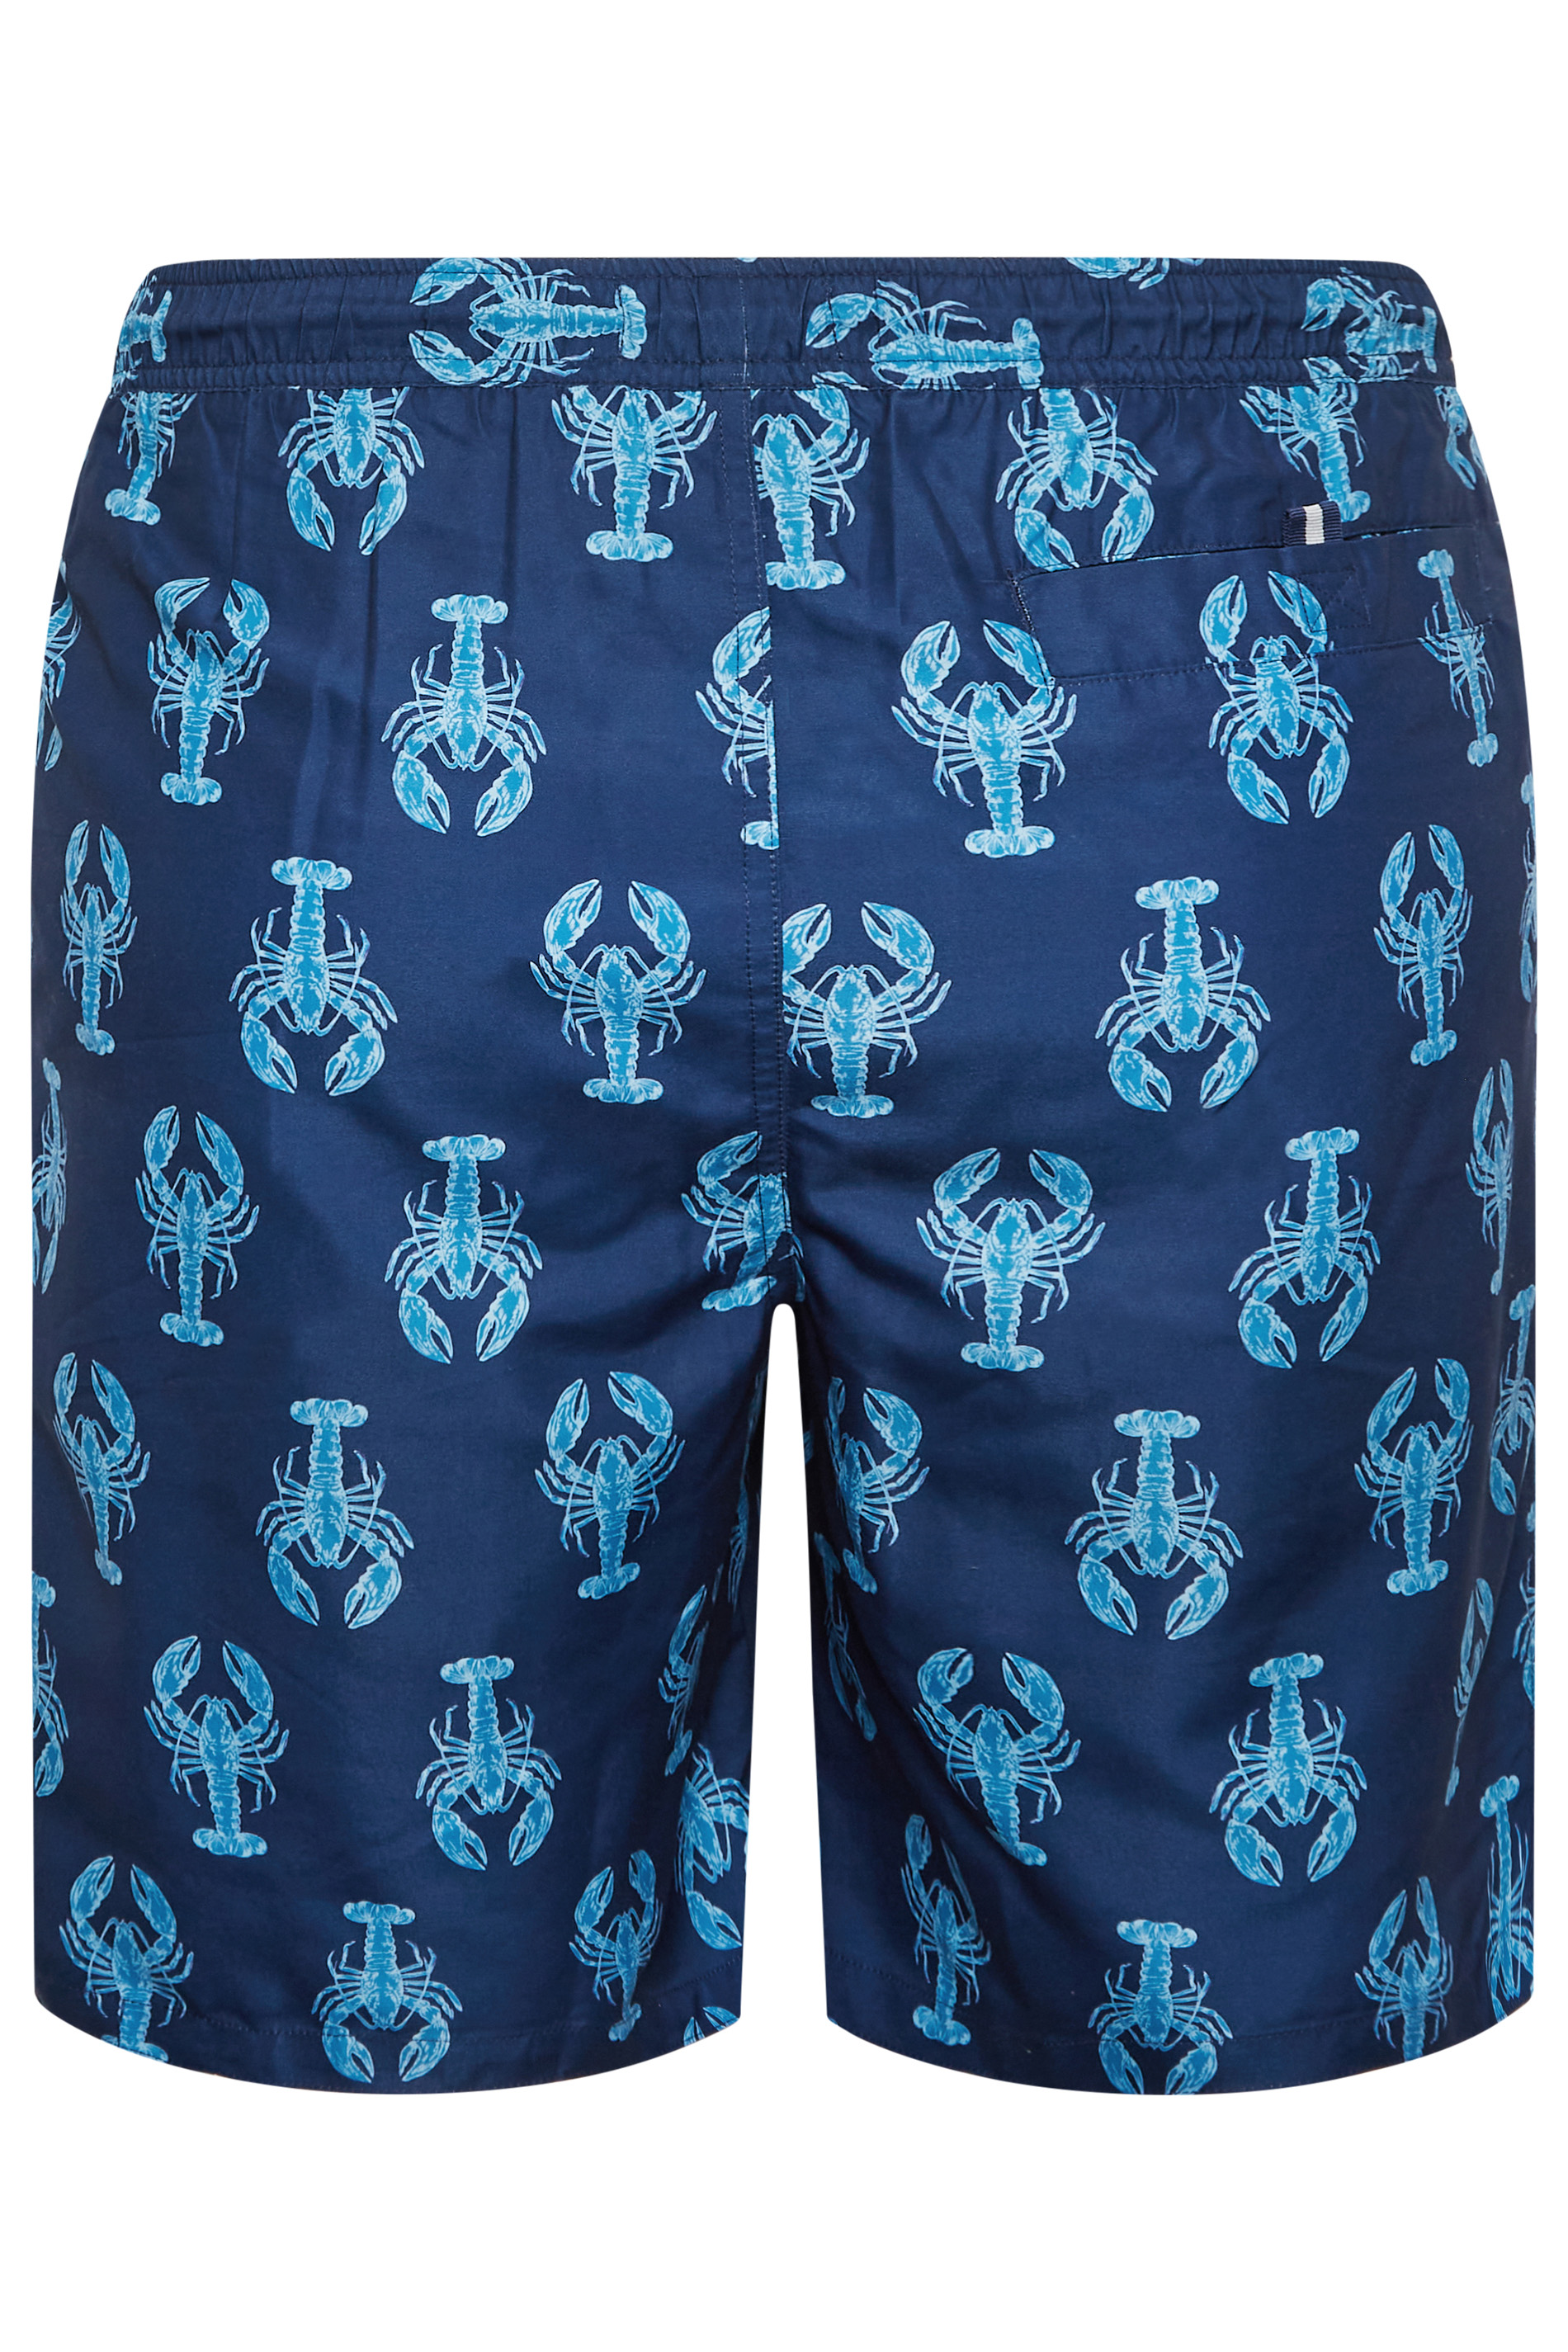 BadRhino Big & Tall Navy Blue Lobster Print Swim Shorts | BadRhino